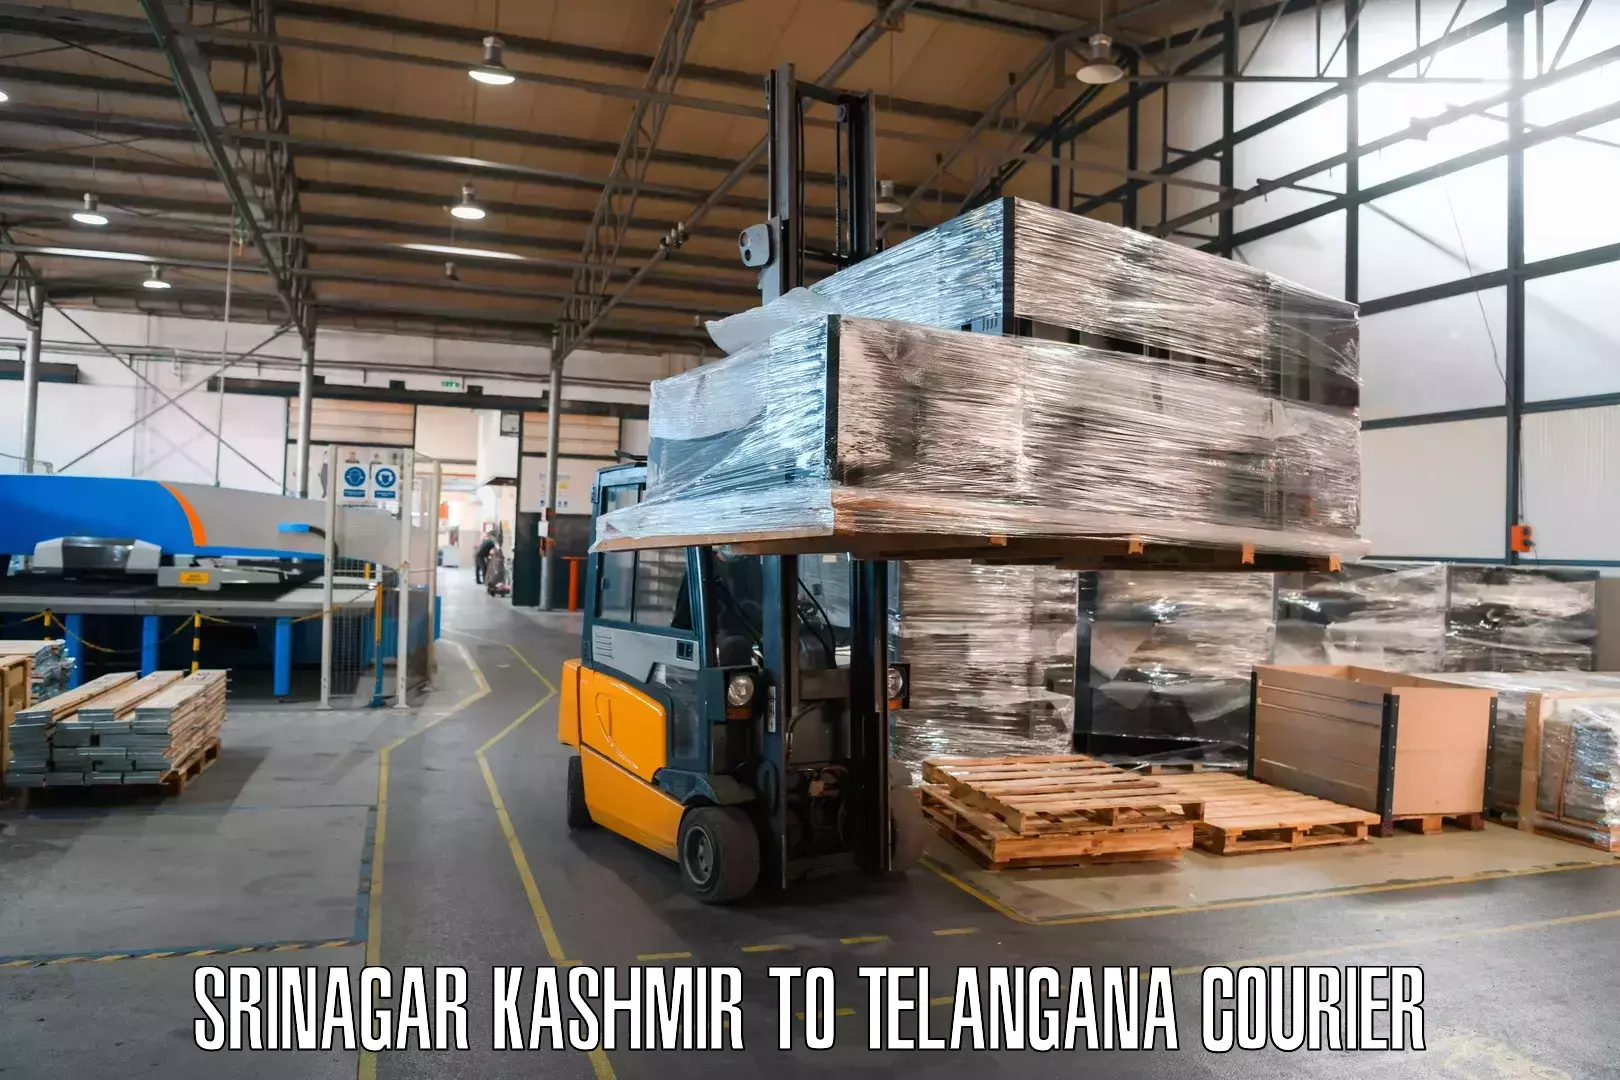 Professional parcel services Srinagar Kashmir to Amangal